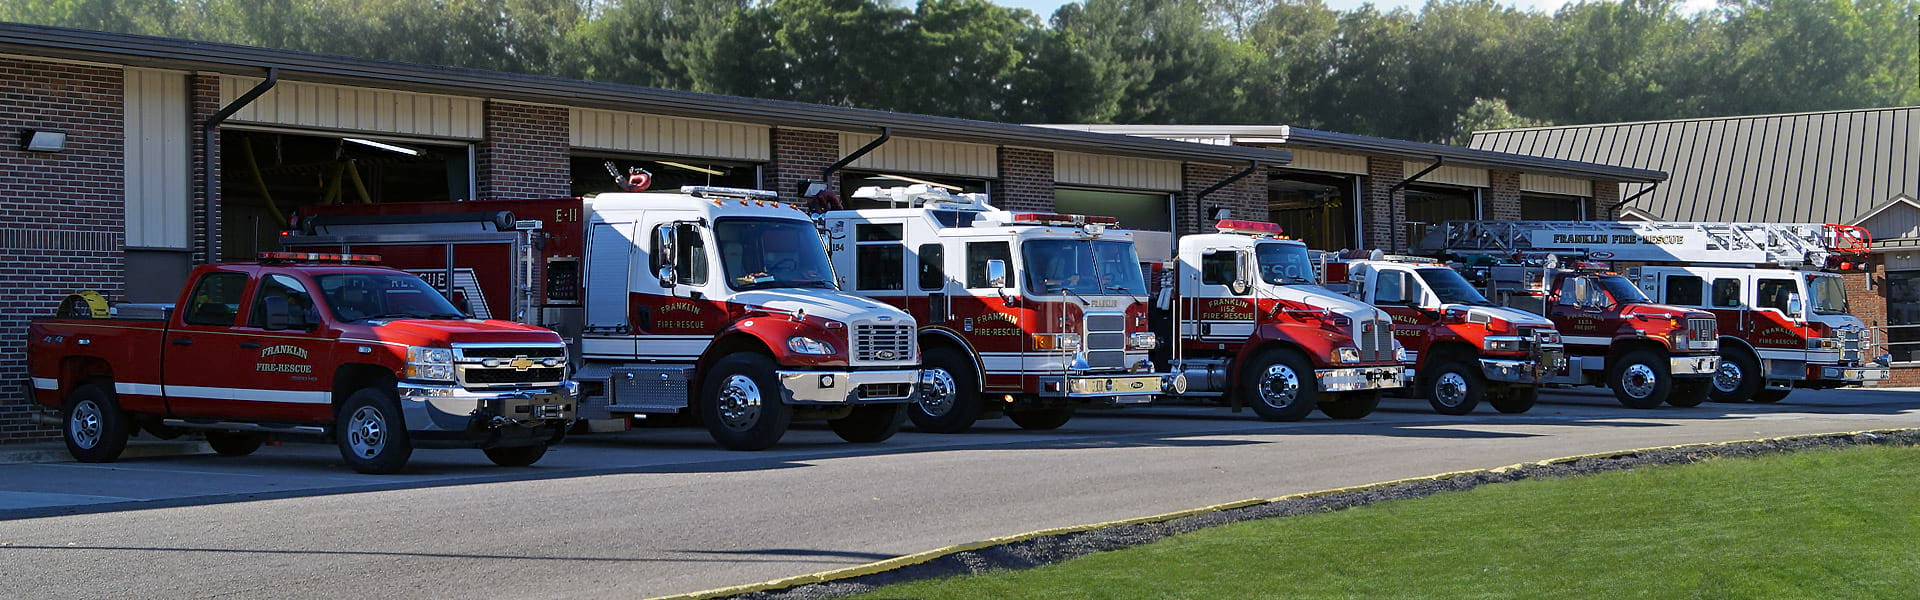 Franklin NC Fire Department